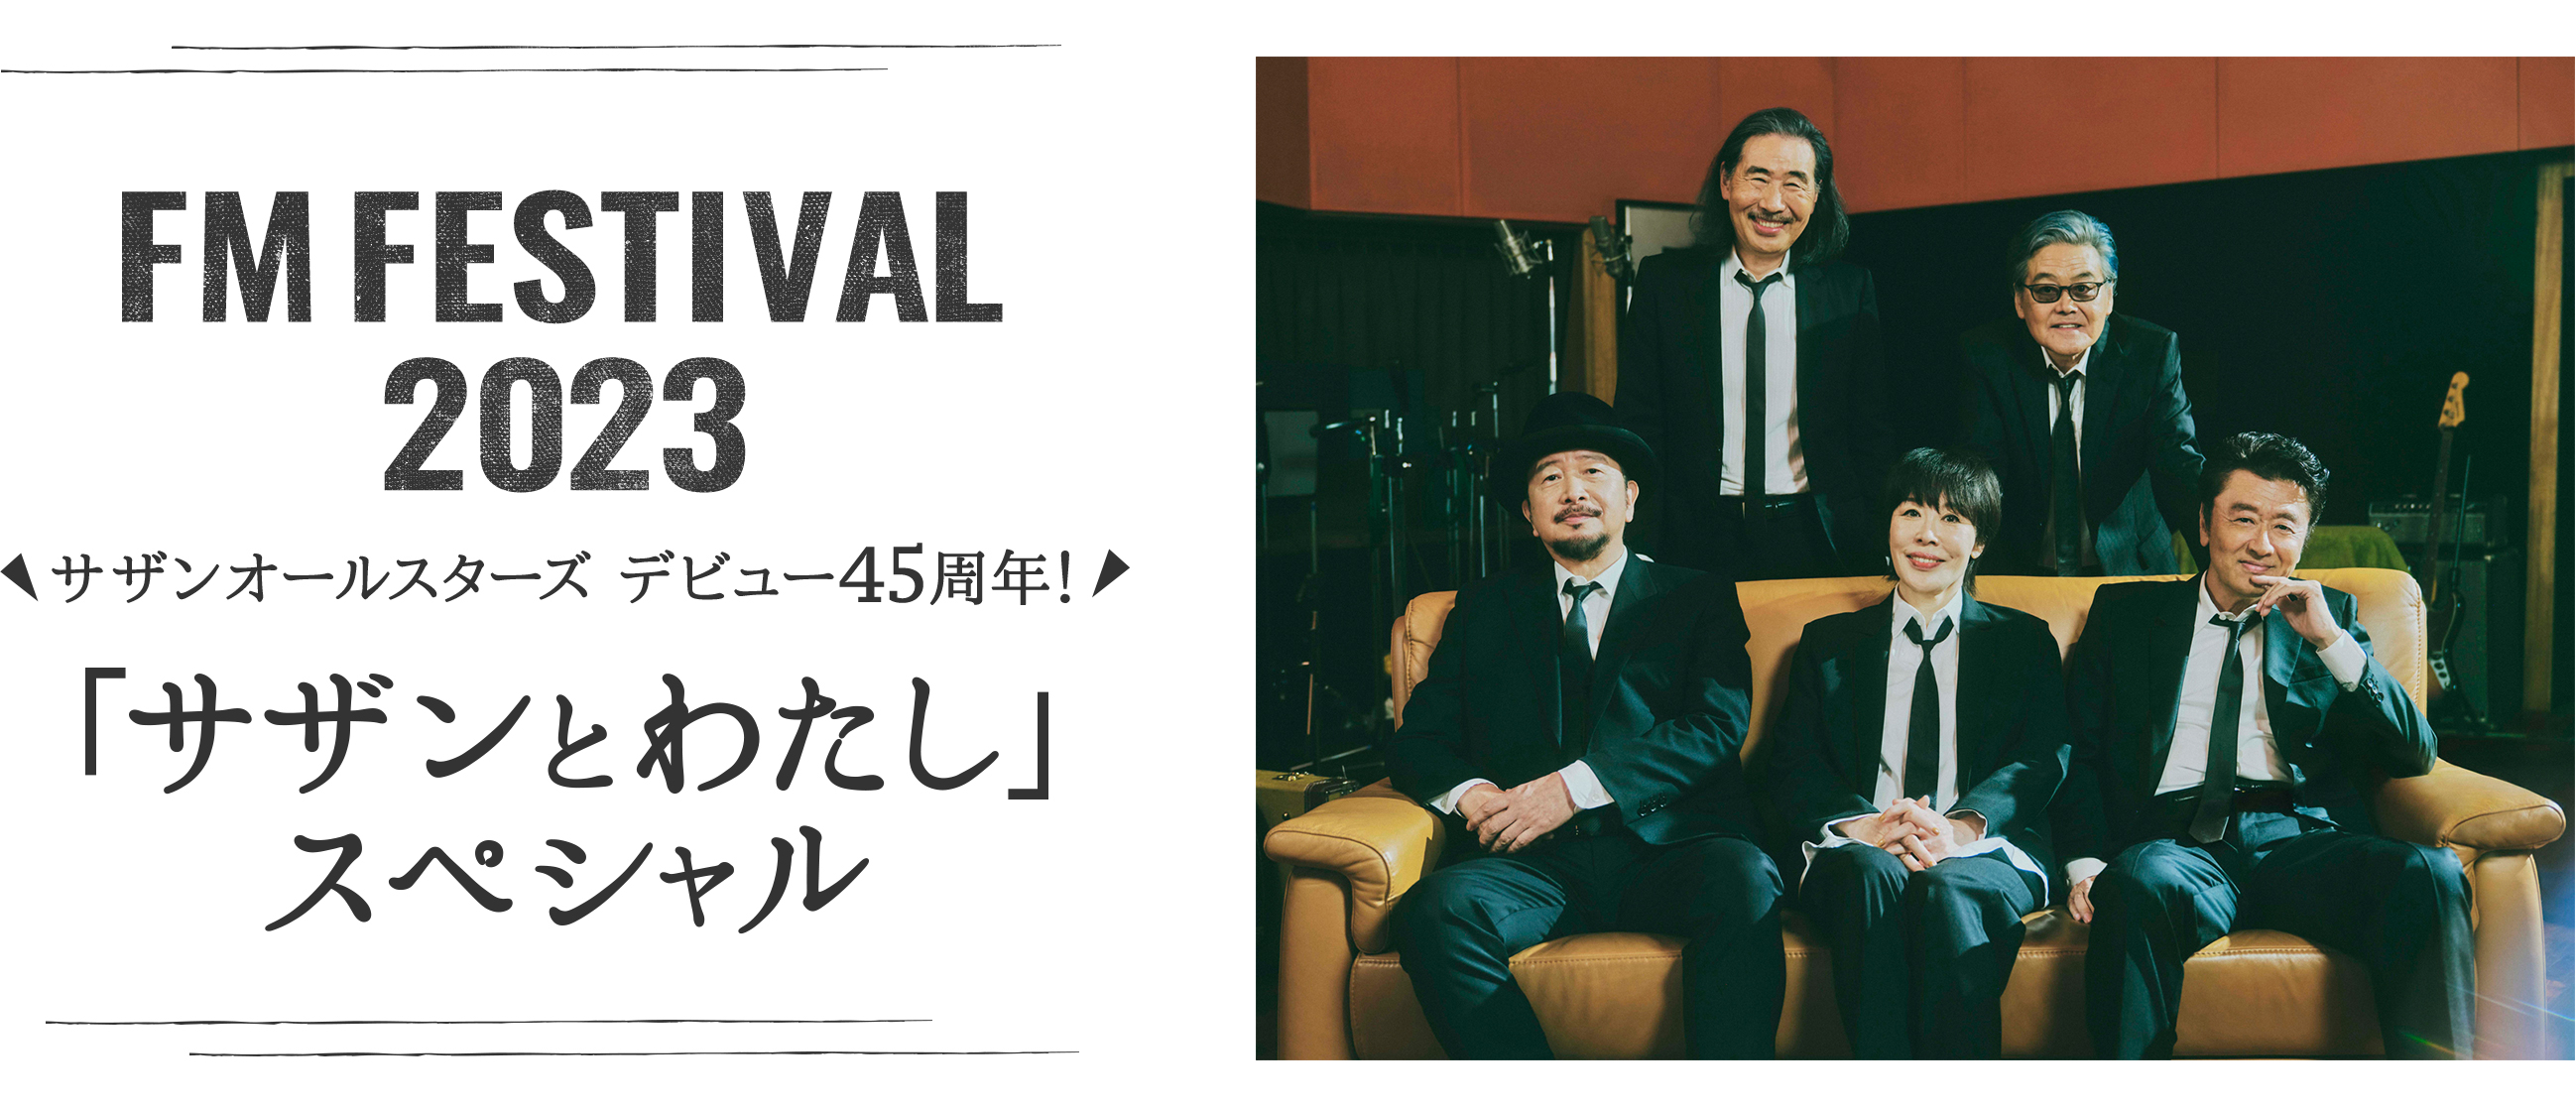 FM FESTIVAL 2023 サザンオールスターズデビュー45周年！「サザンとわたし」スペシャル - TOKYO FM 80.0MHz